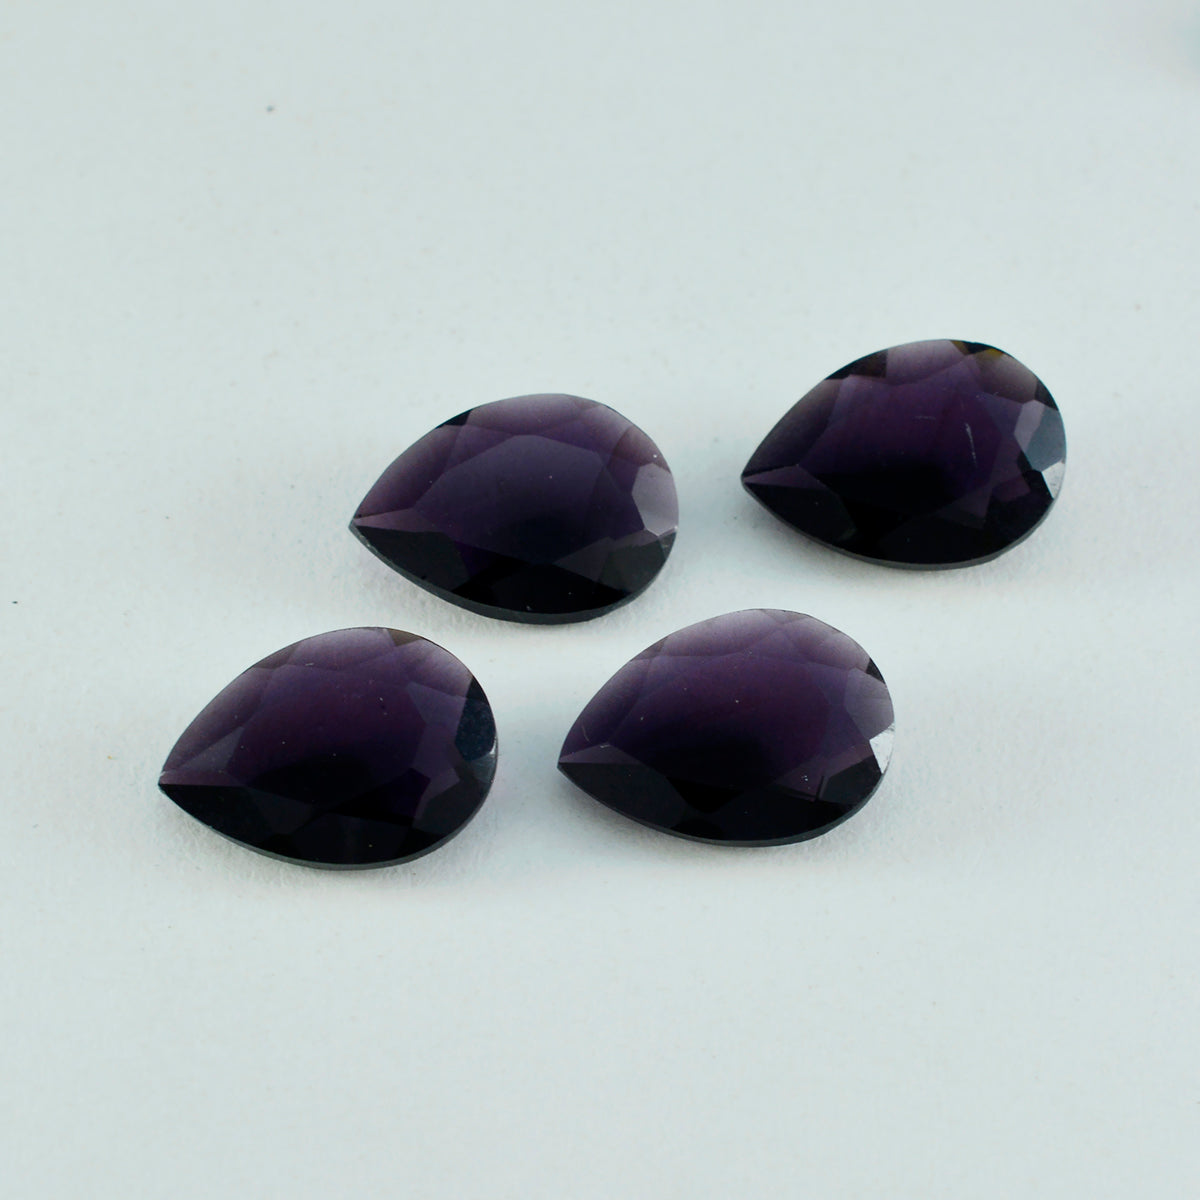 Riyogems 1PC Purple Amethyst CZ Faceted 10x14 mm Pear Shape A+1 Quality Loose Stone